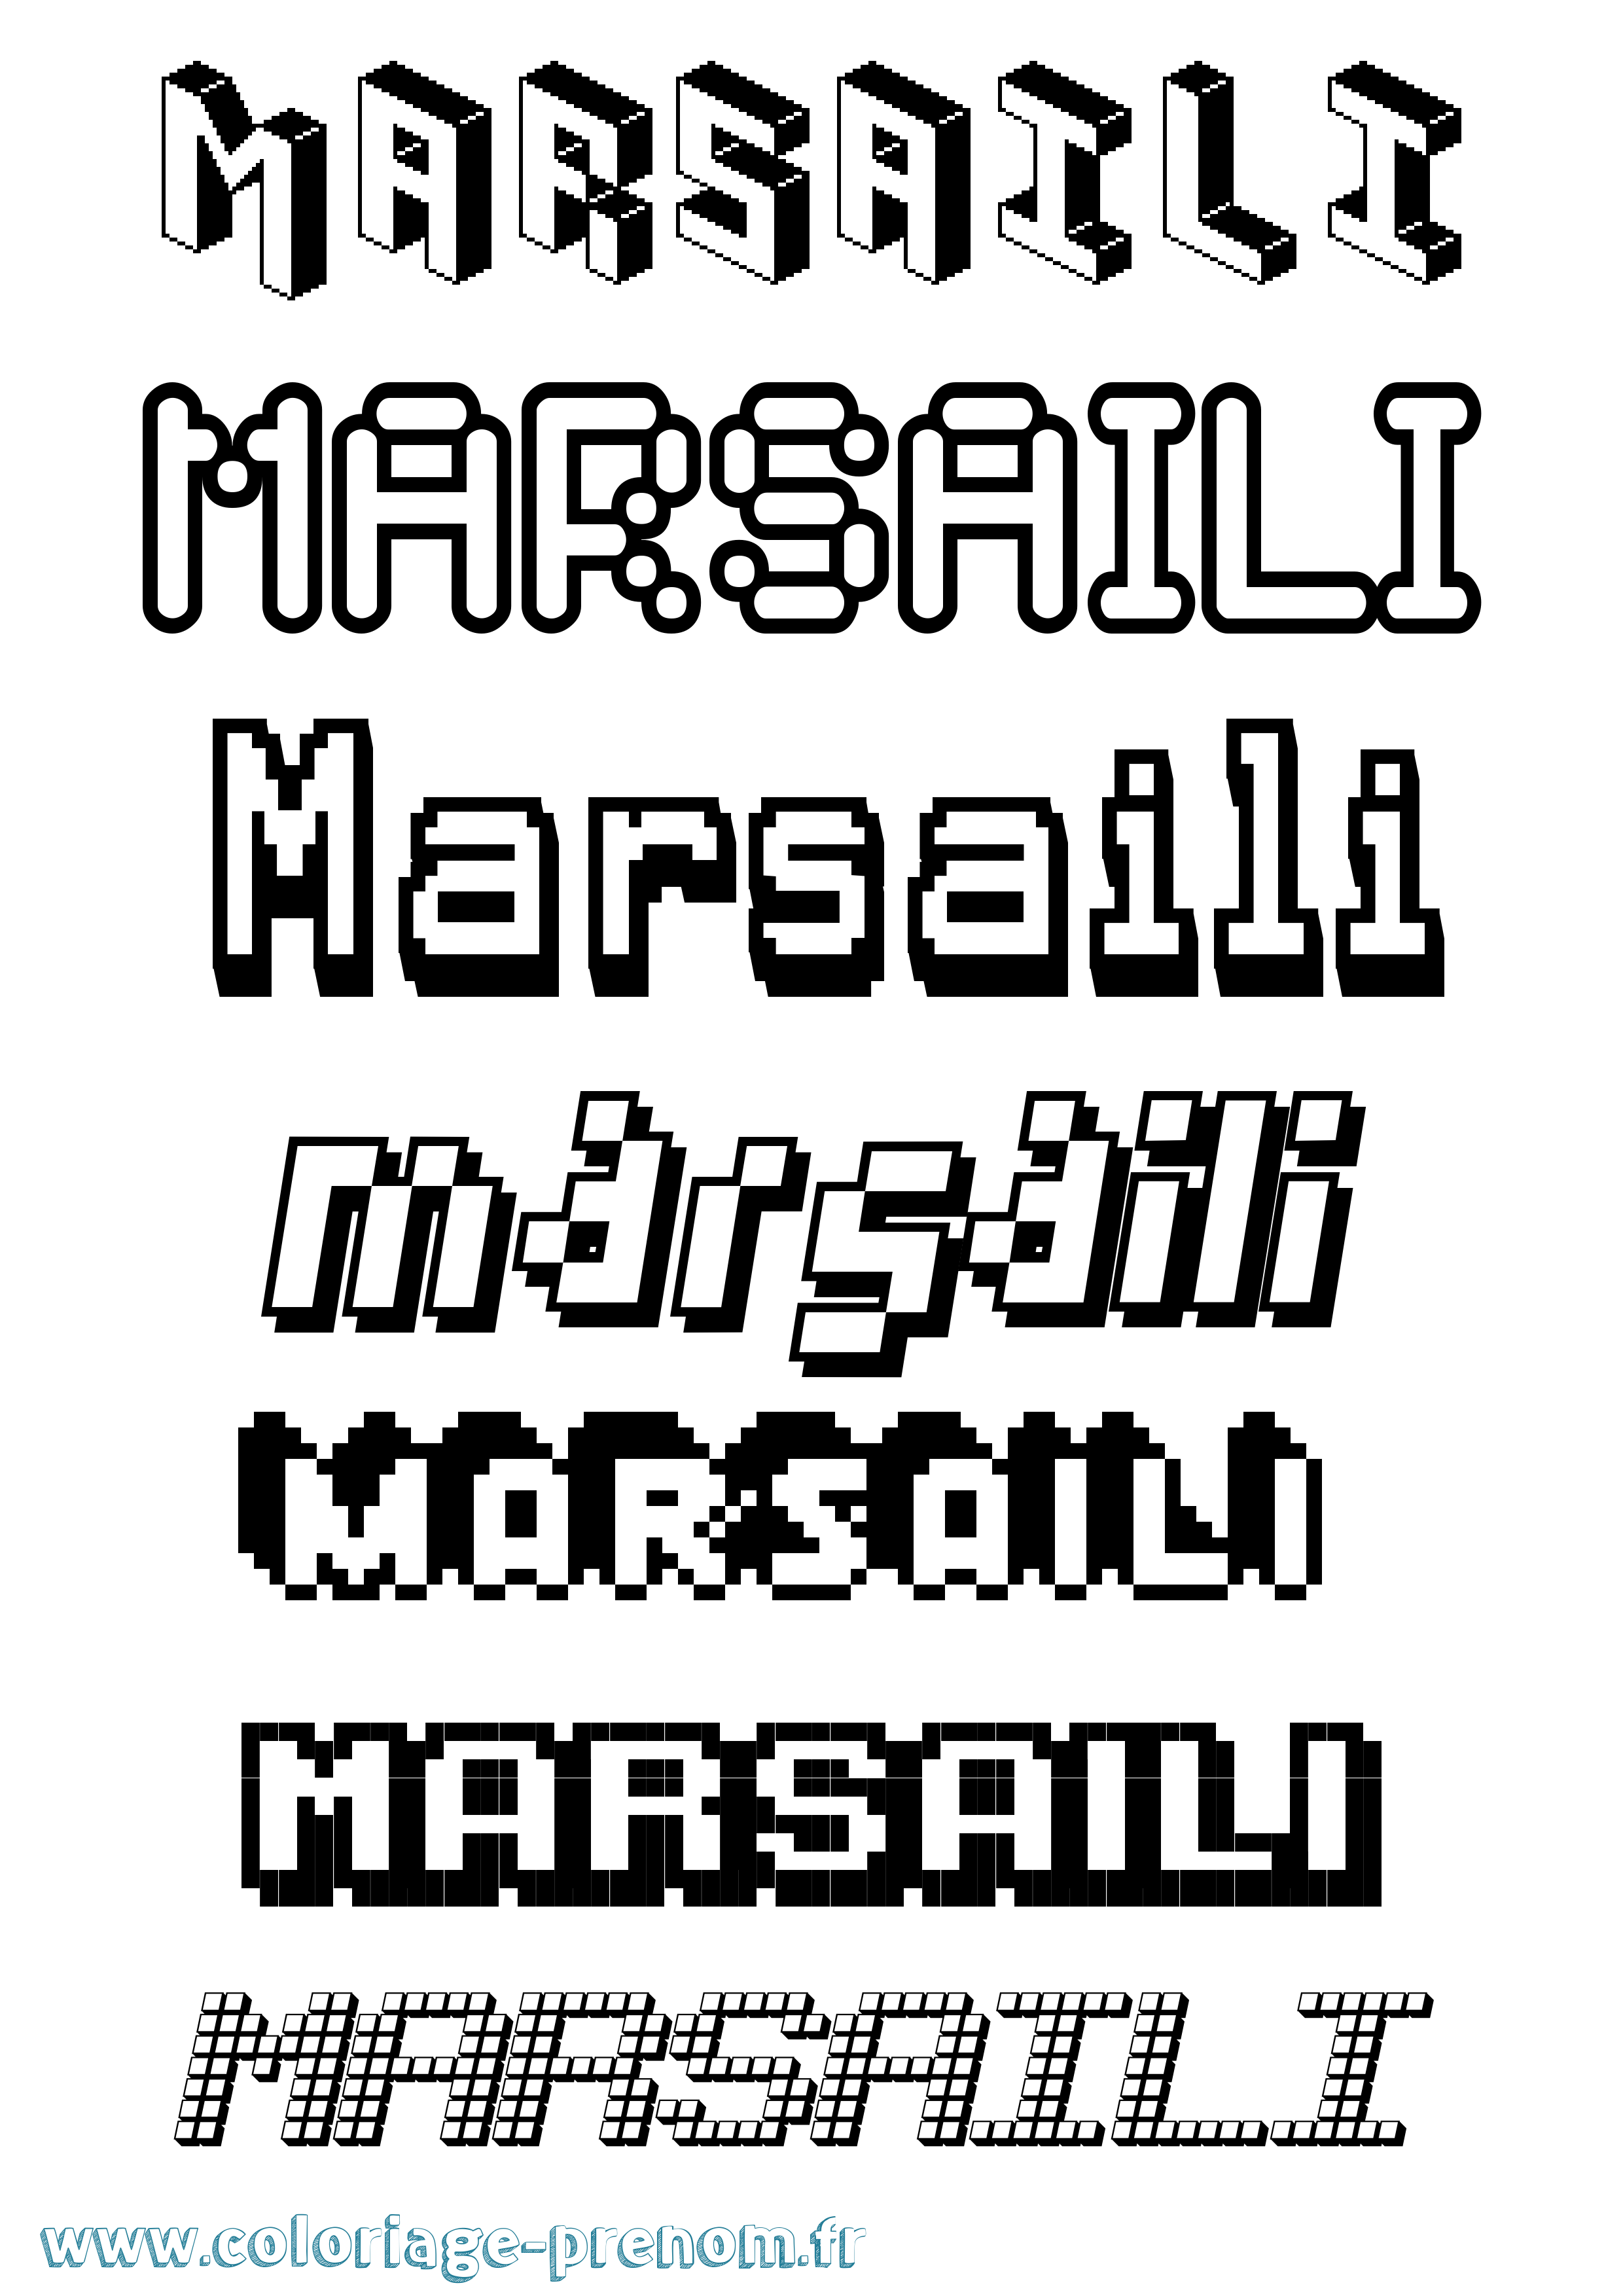 Coloriage prénom Marsaili Pixel